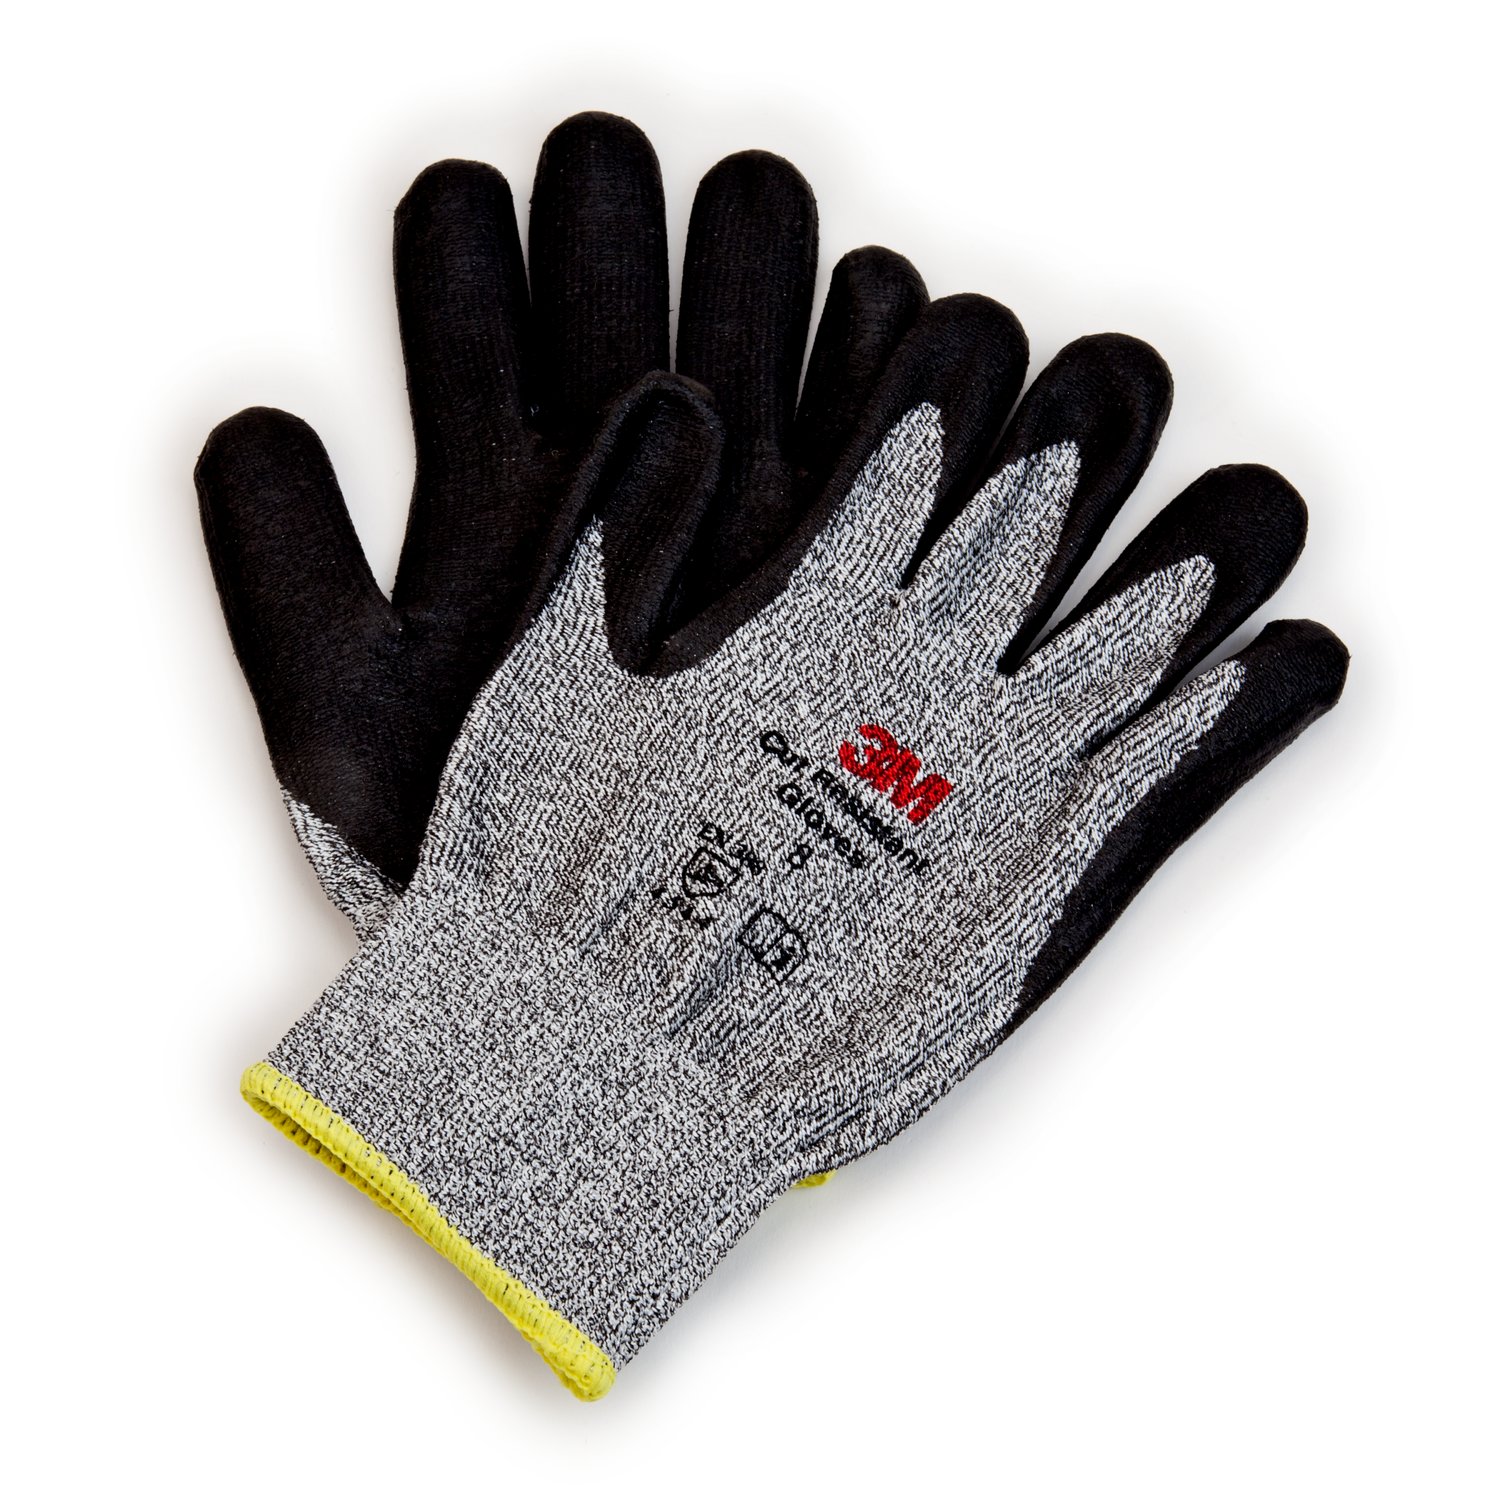 7100023132 - 3M Comfort Grip Glove CGM-CR, Cut Resistant (ANSI 3), Size M, 72
Pair/Case